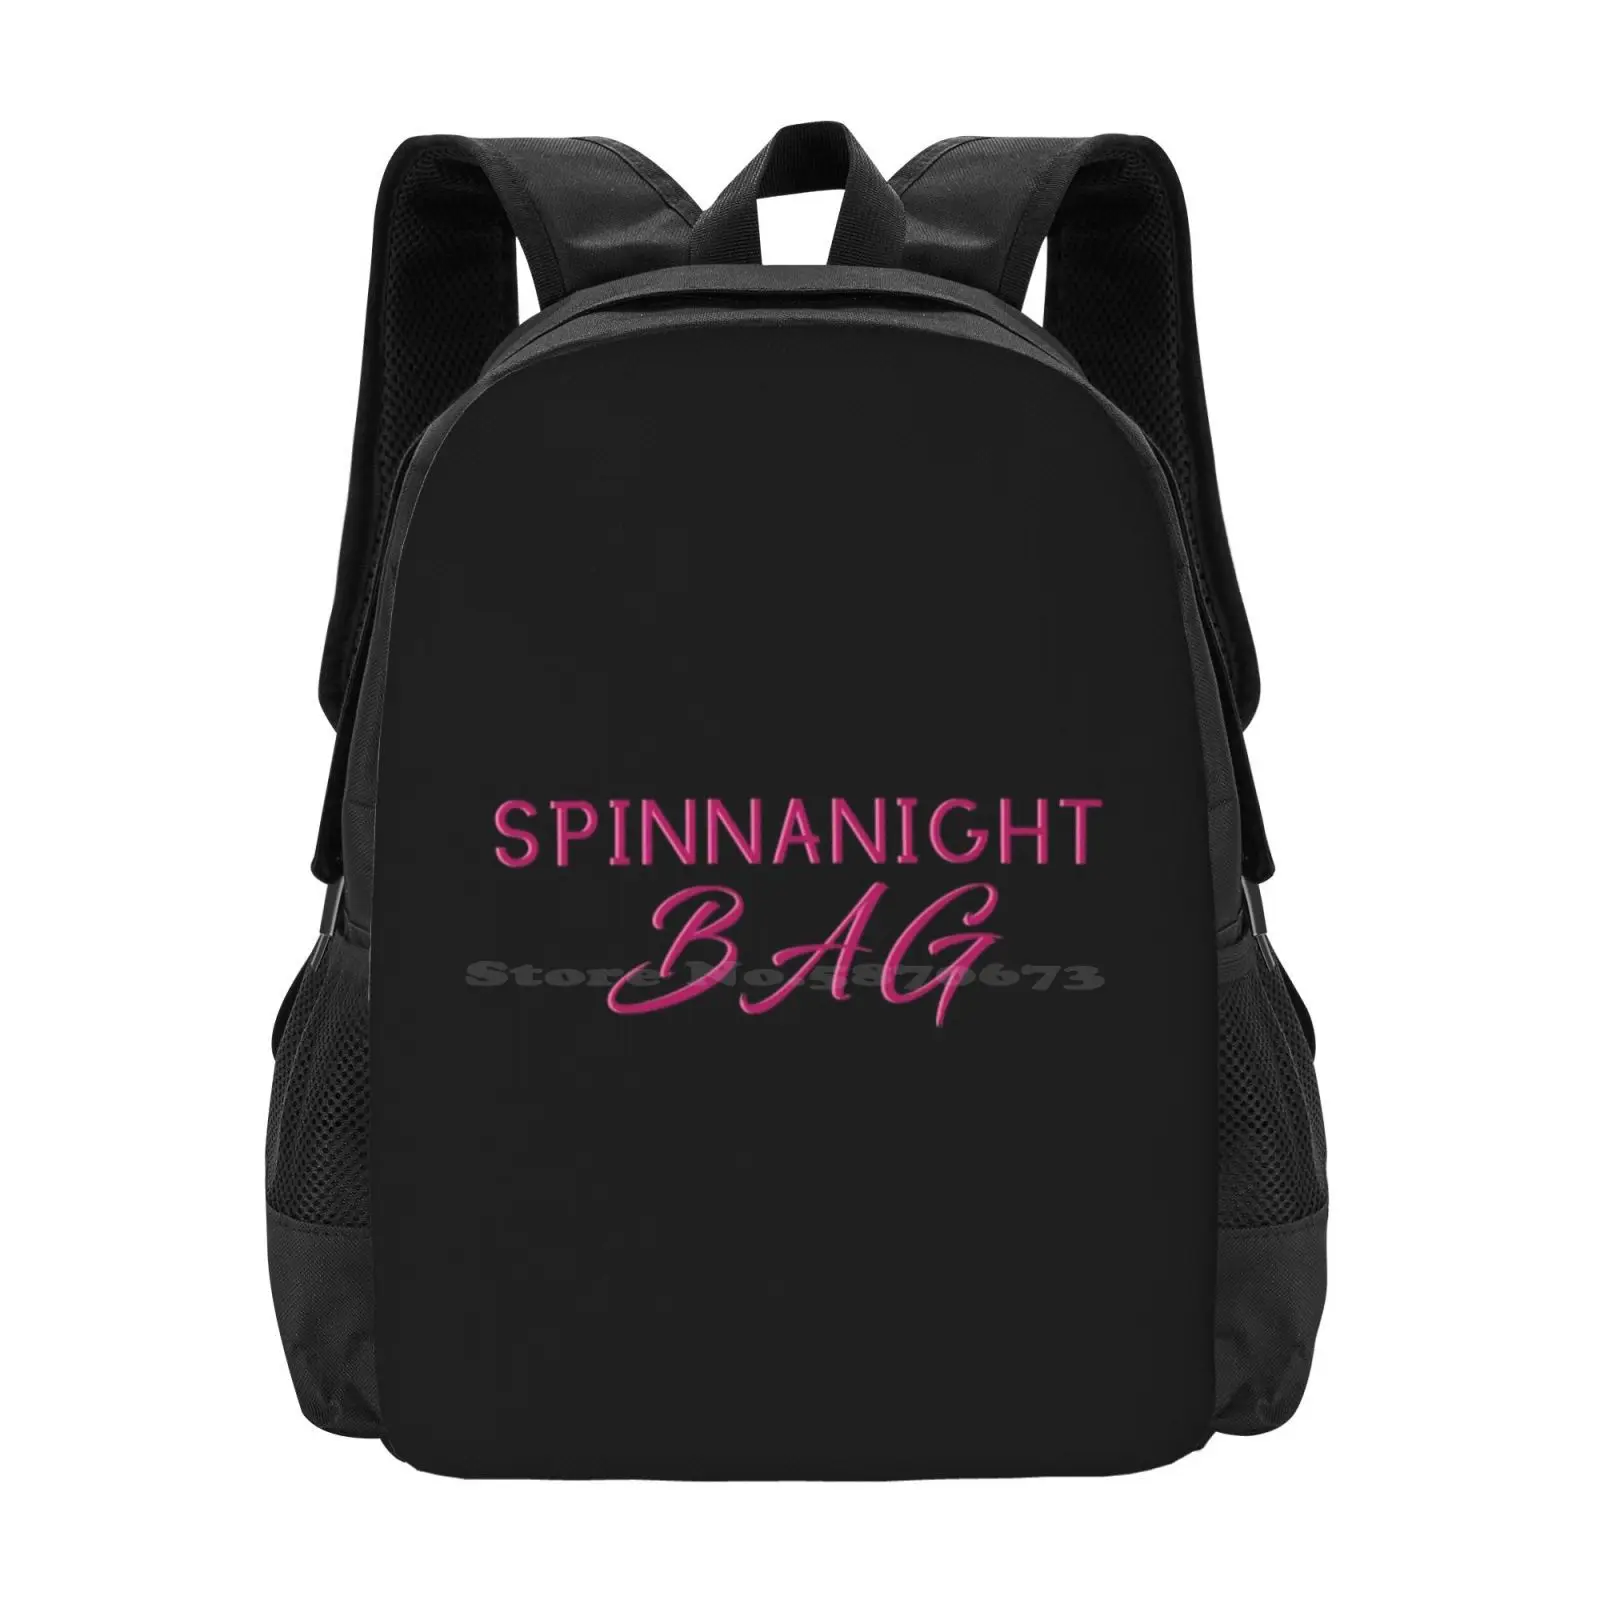 Spinnanight Bag